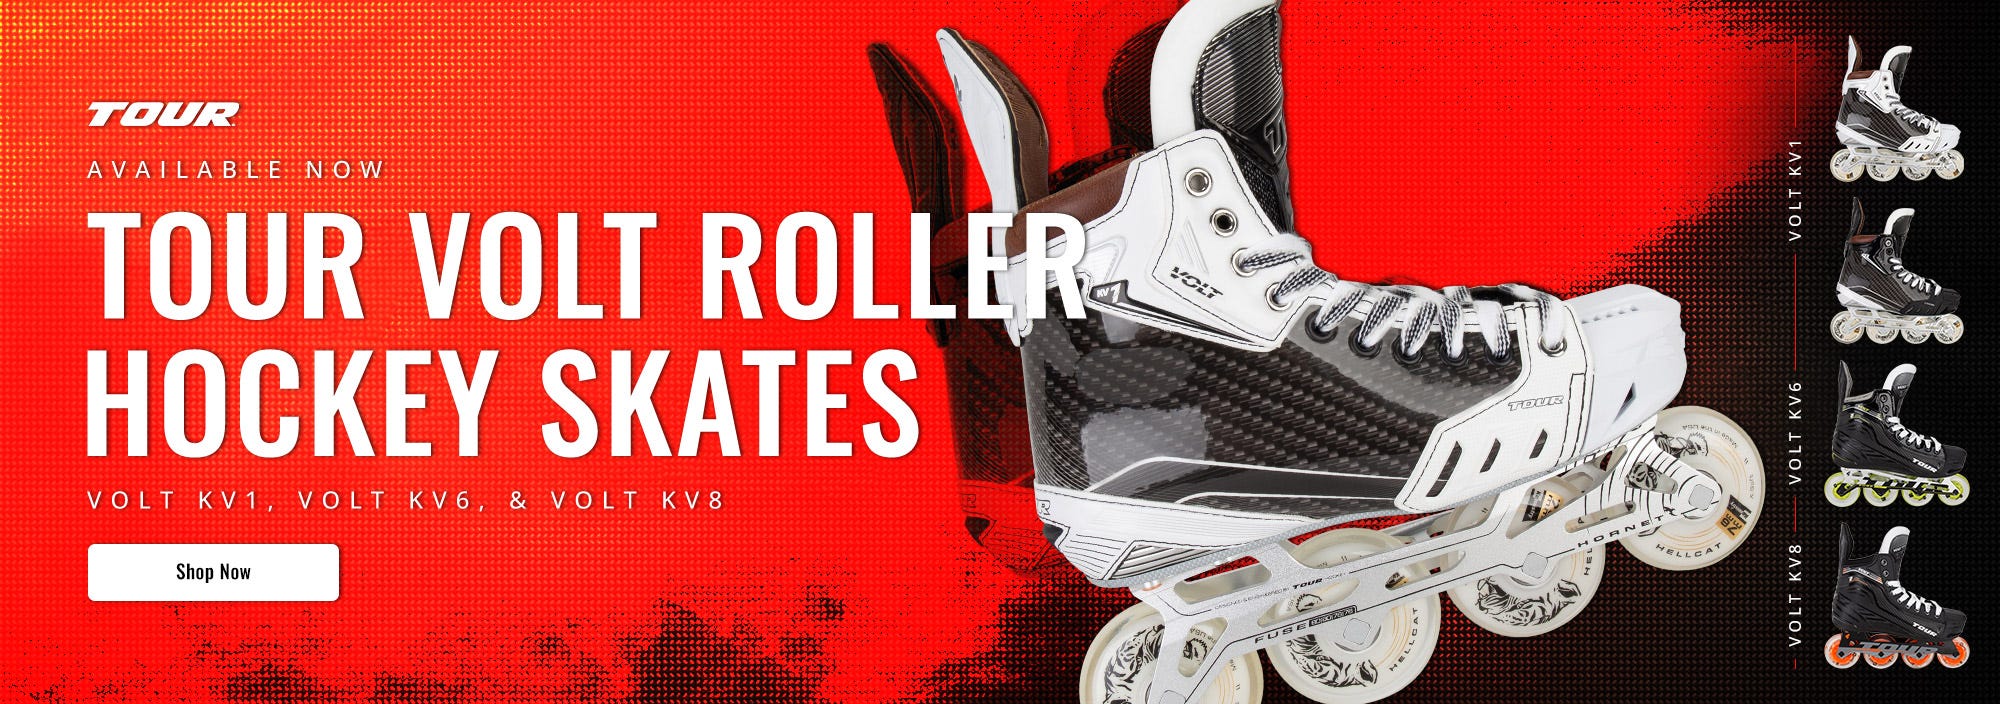 Tour Volt Roller Hockey Skates